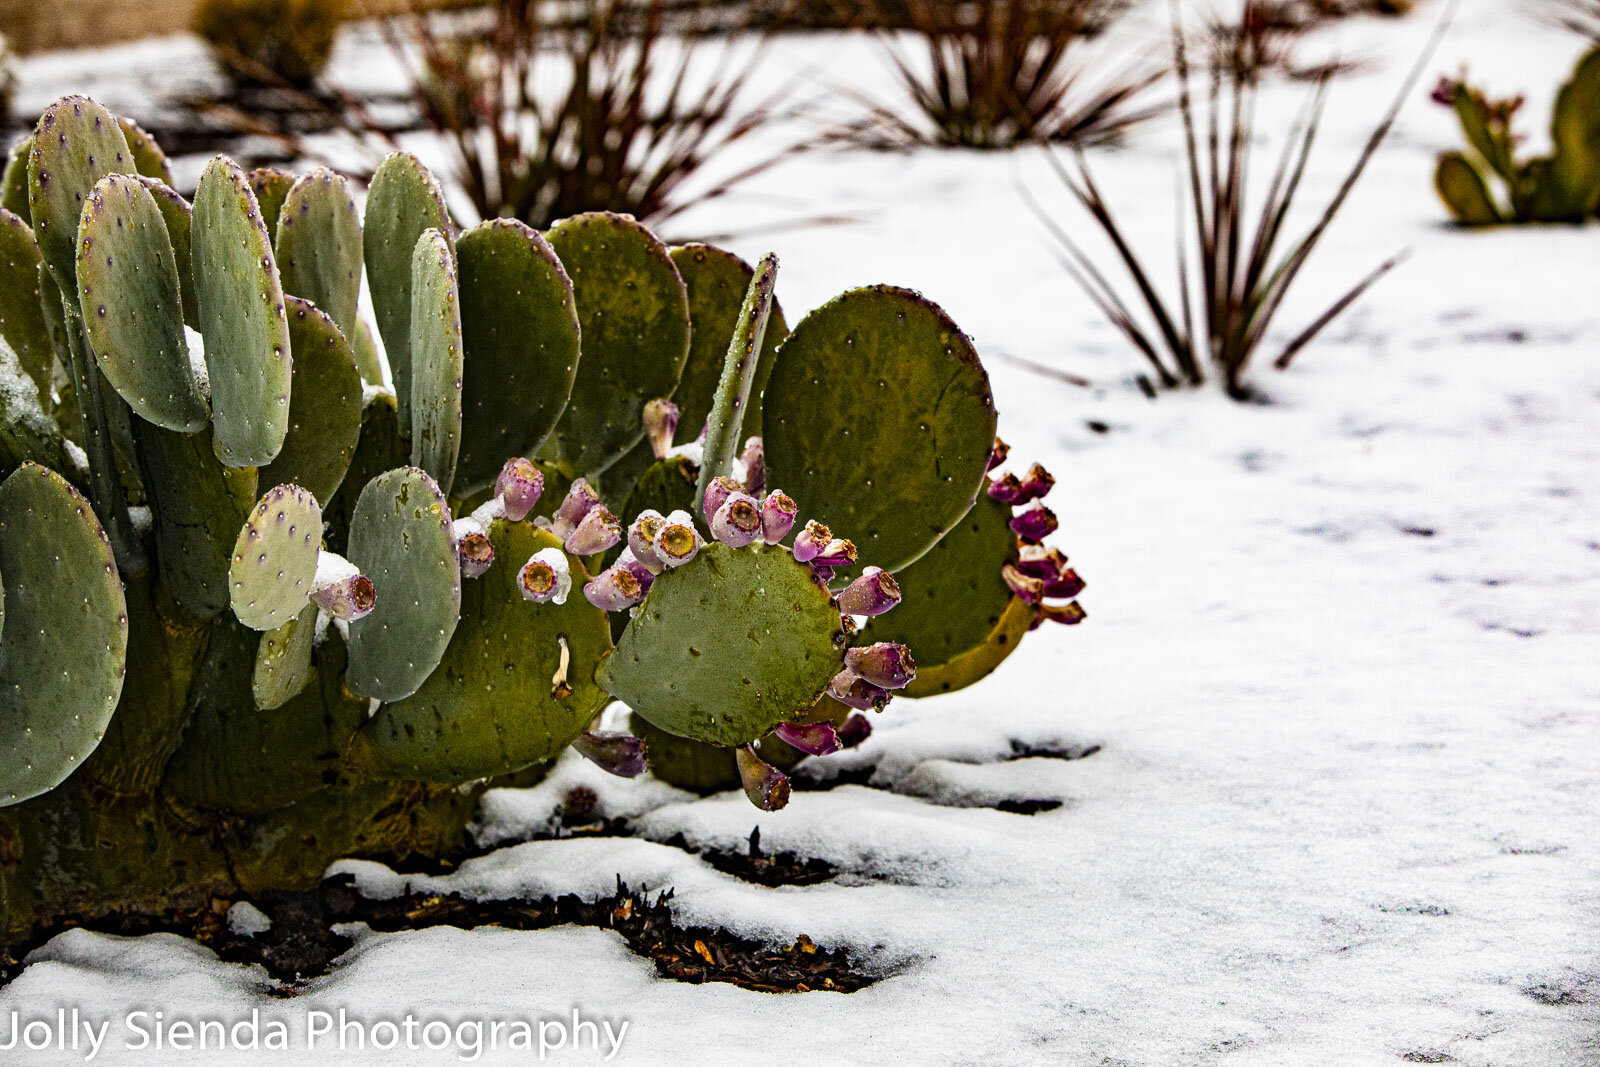 Flowering cactus field in the snow